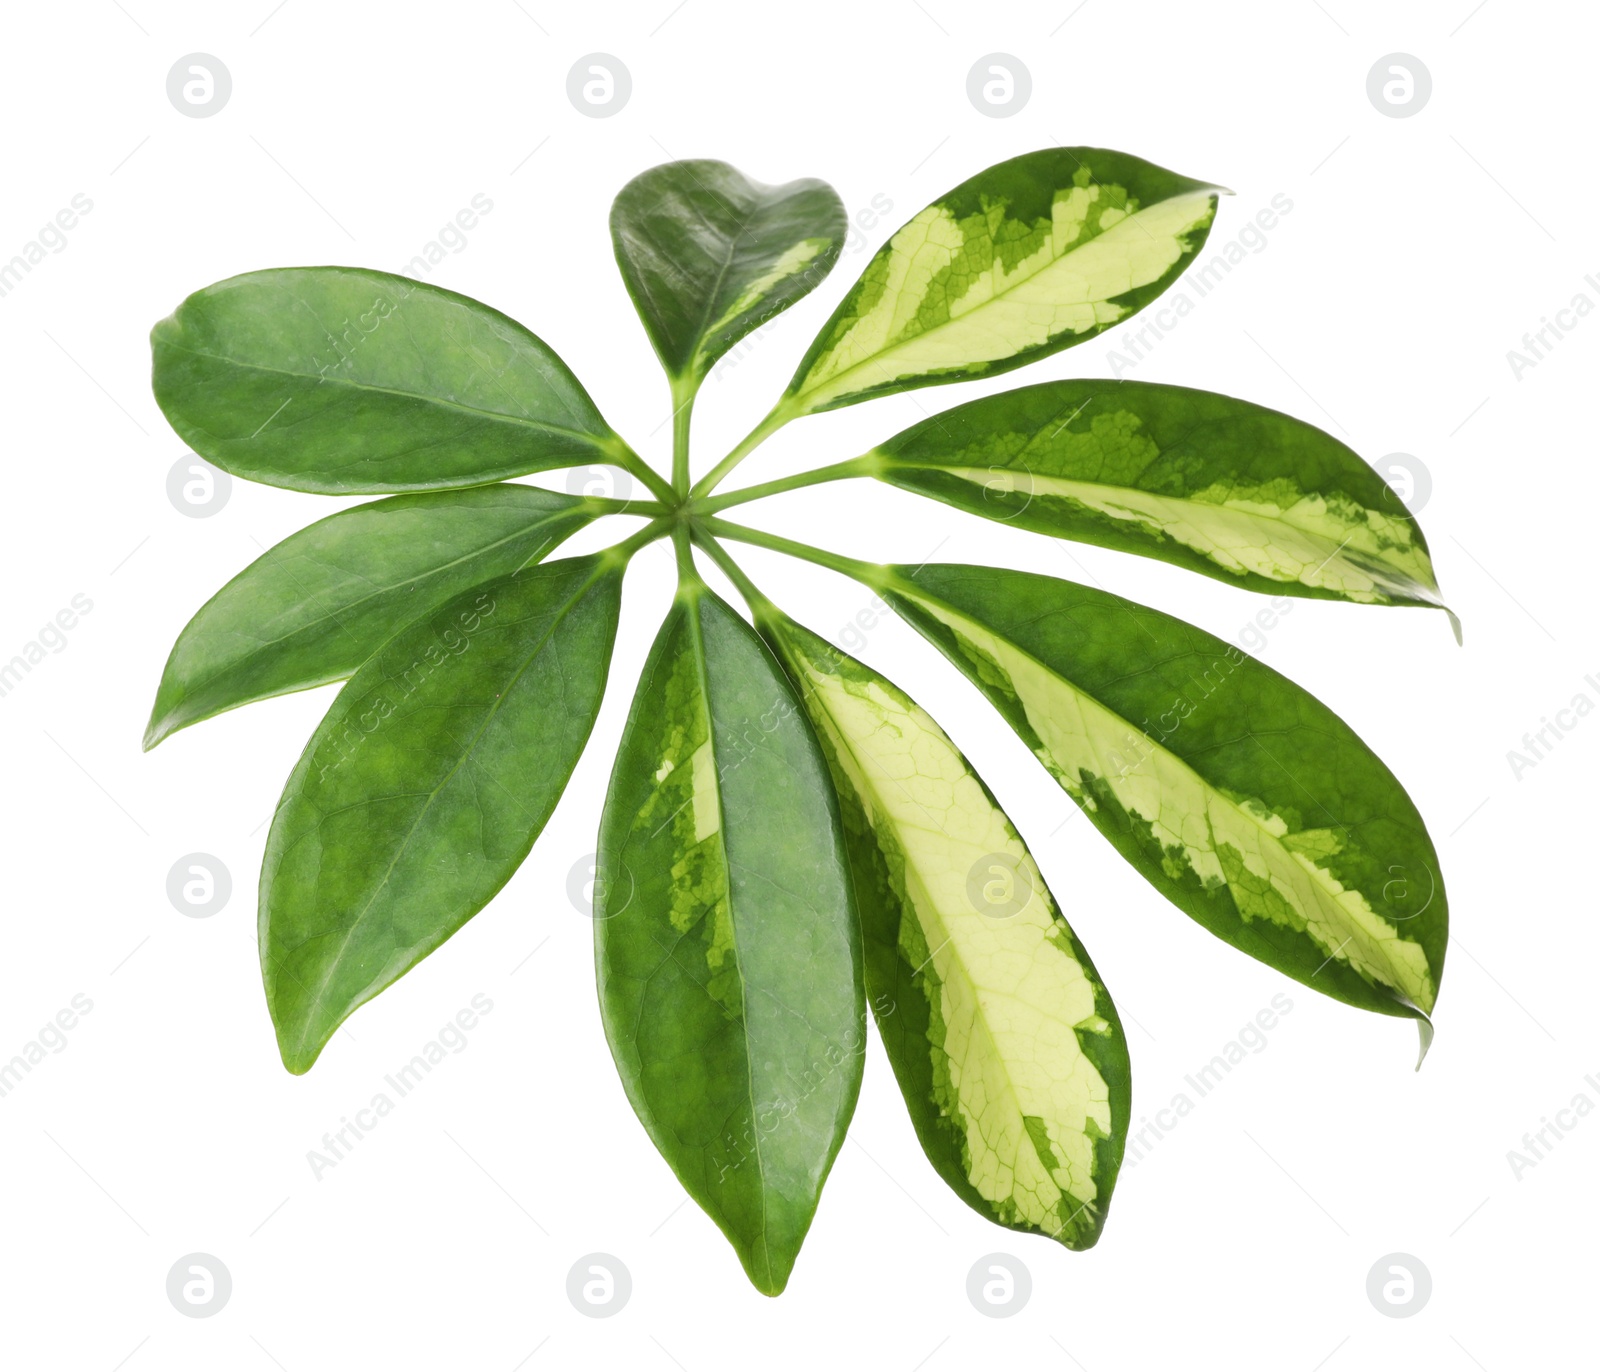 Photo of Leaf of tropical schefflera plant on white background